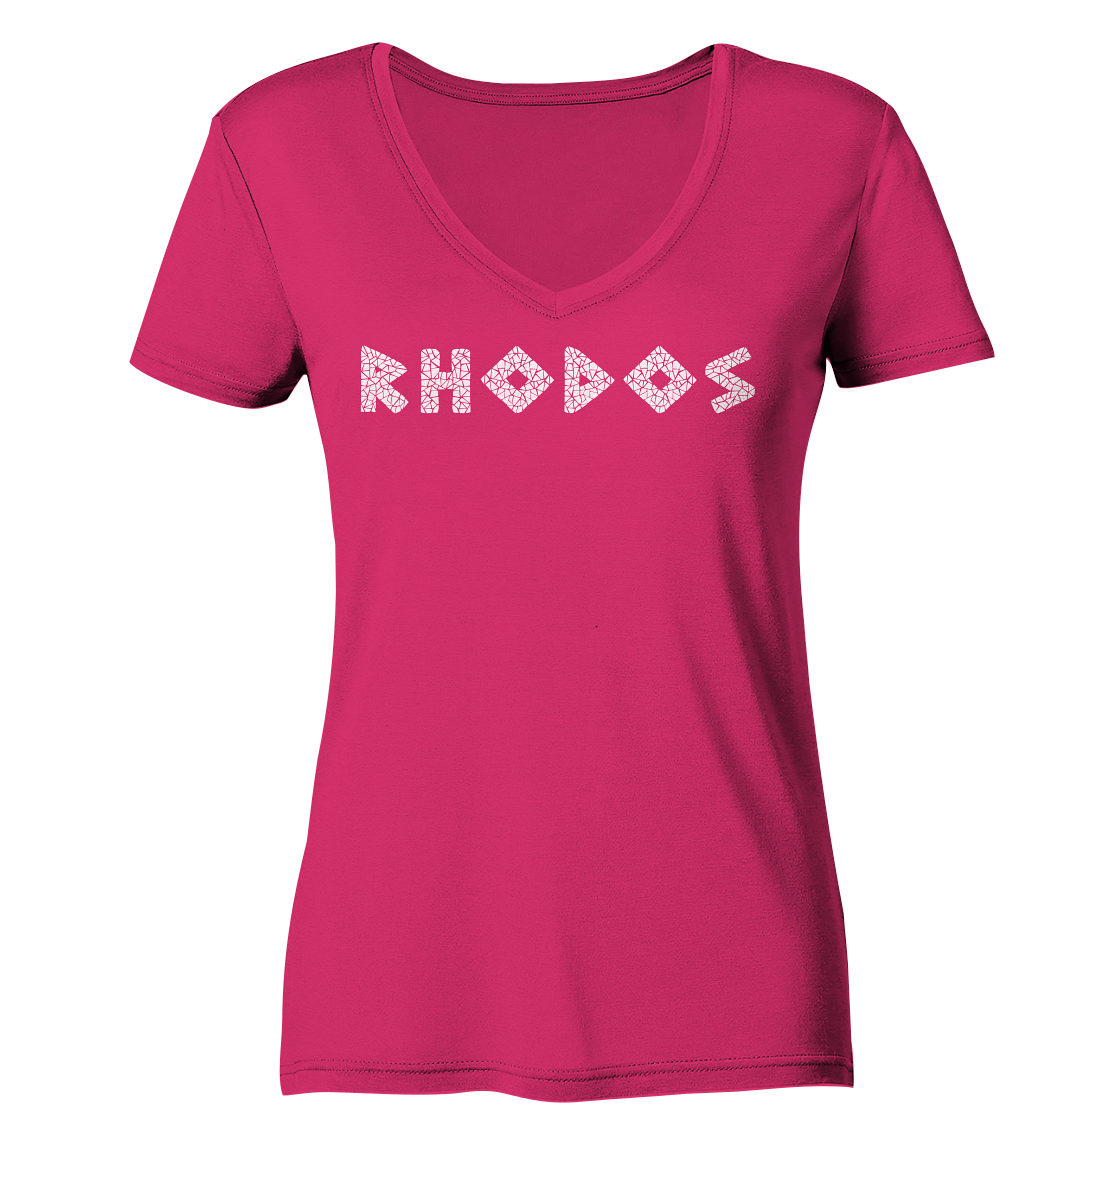 Rhodos Mosaik - Ladies Organic V-Neck Shirt